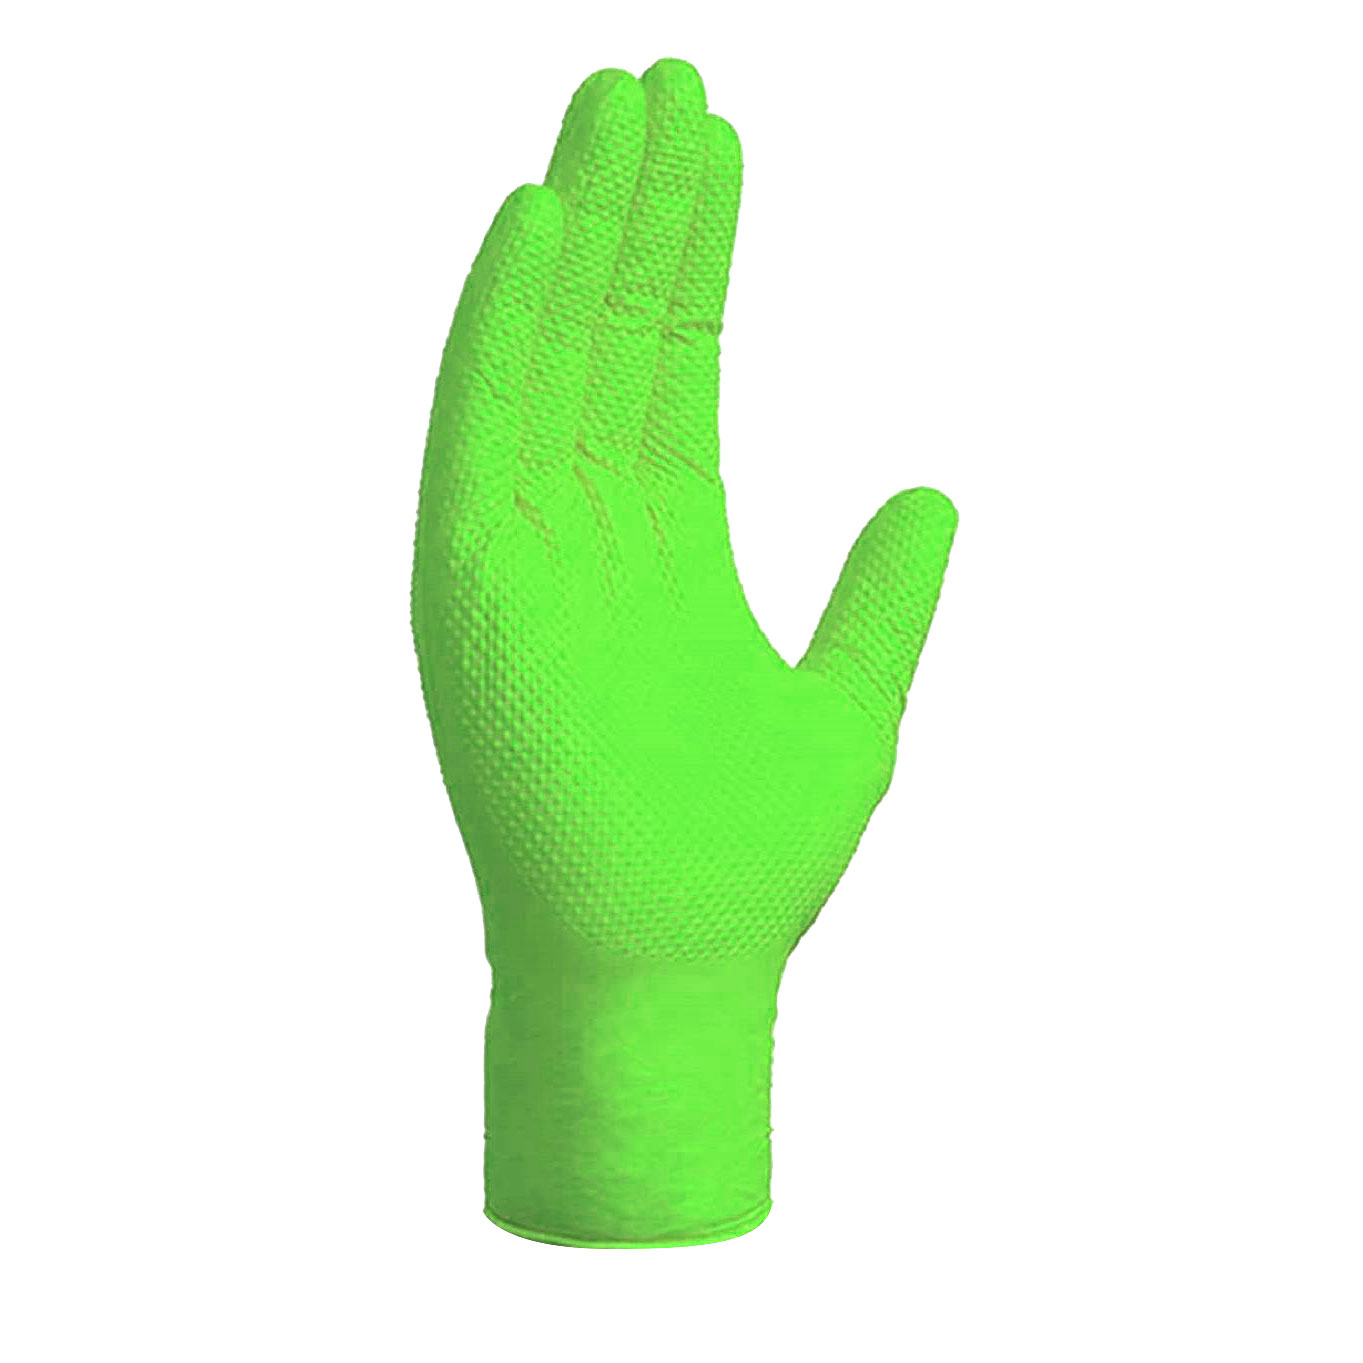 Gloveworks Heavy Duty Nitrile Work Gloves, Green, Medium, 100/Box